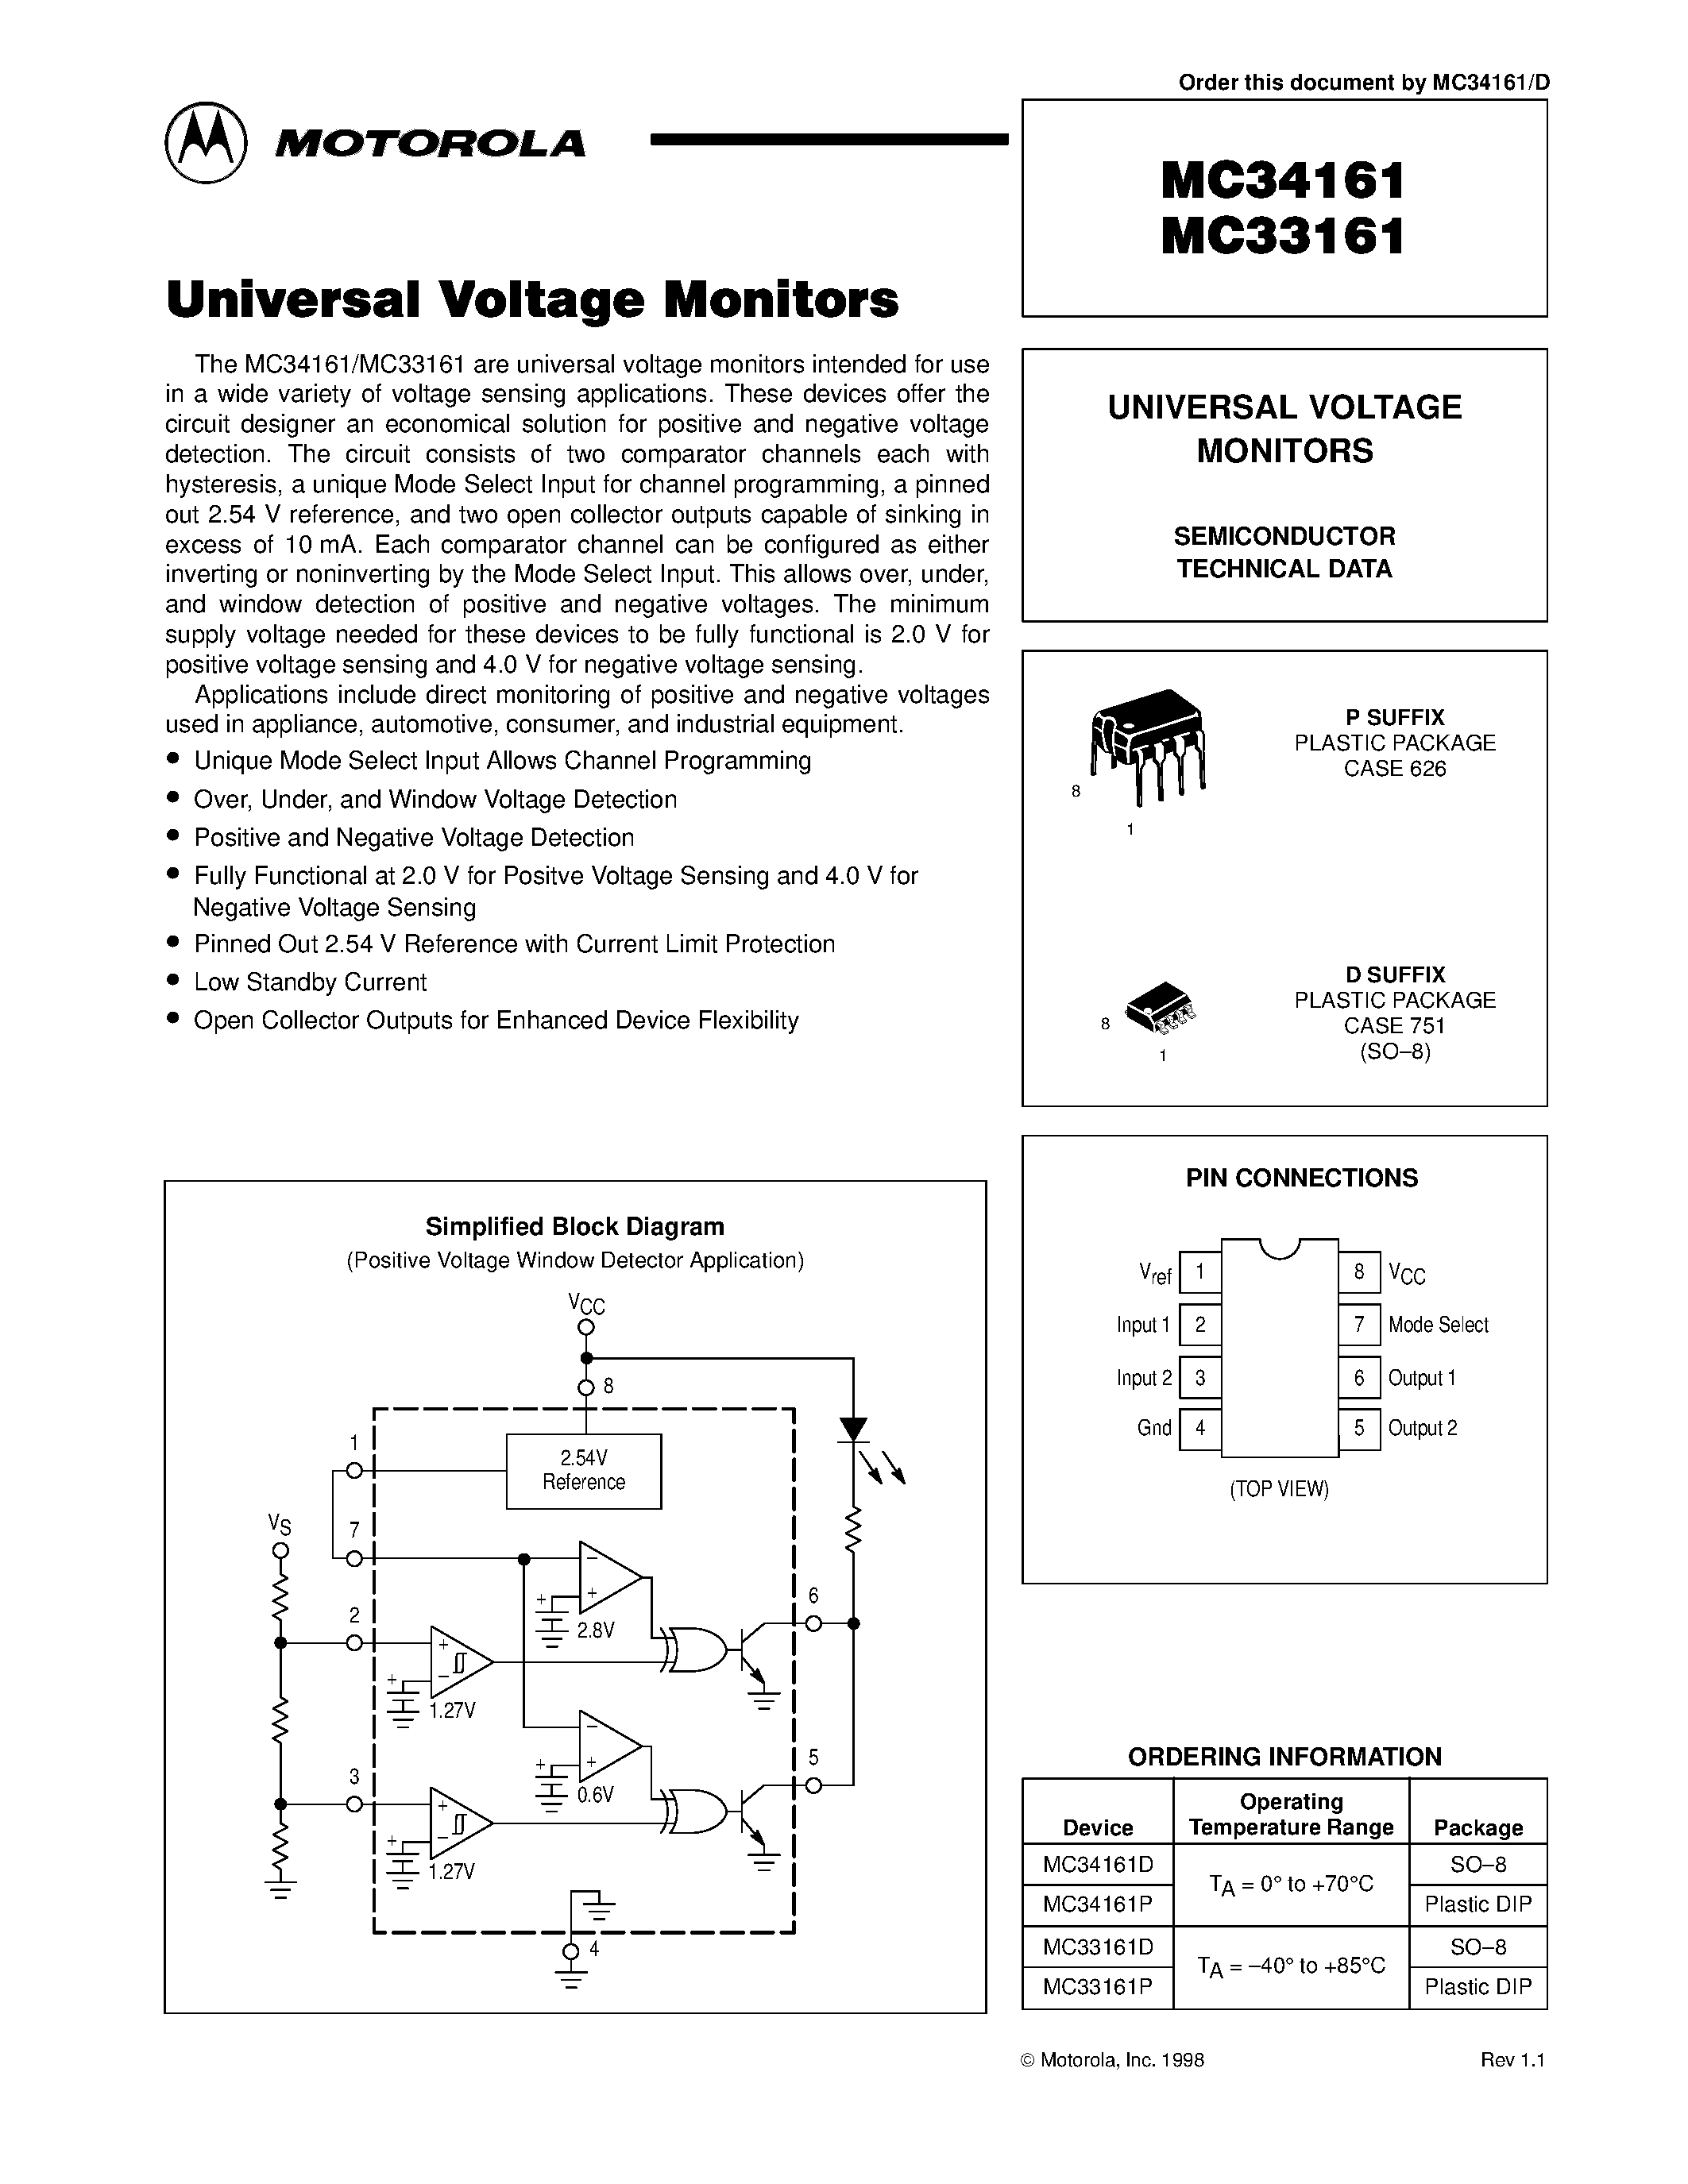 Datasheet MC33161 - UNIVERSAL VOLTAGE MONITORS page 1